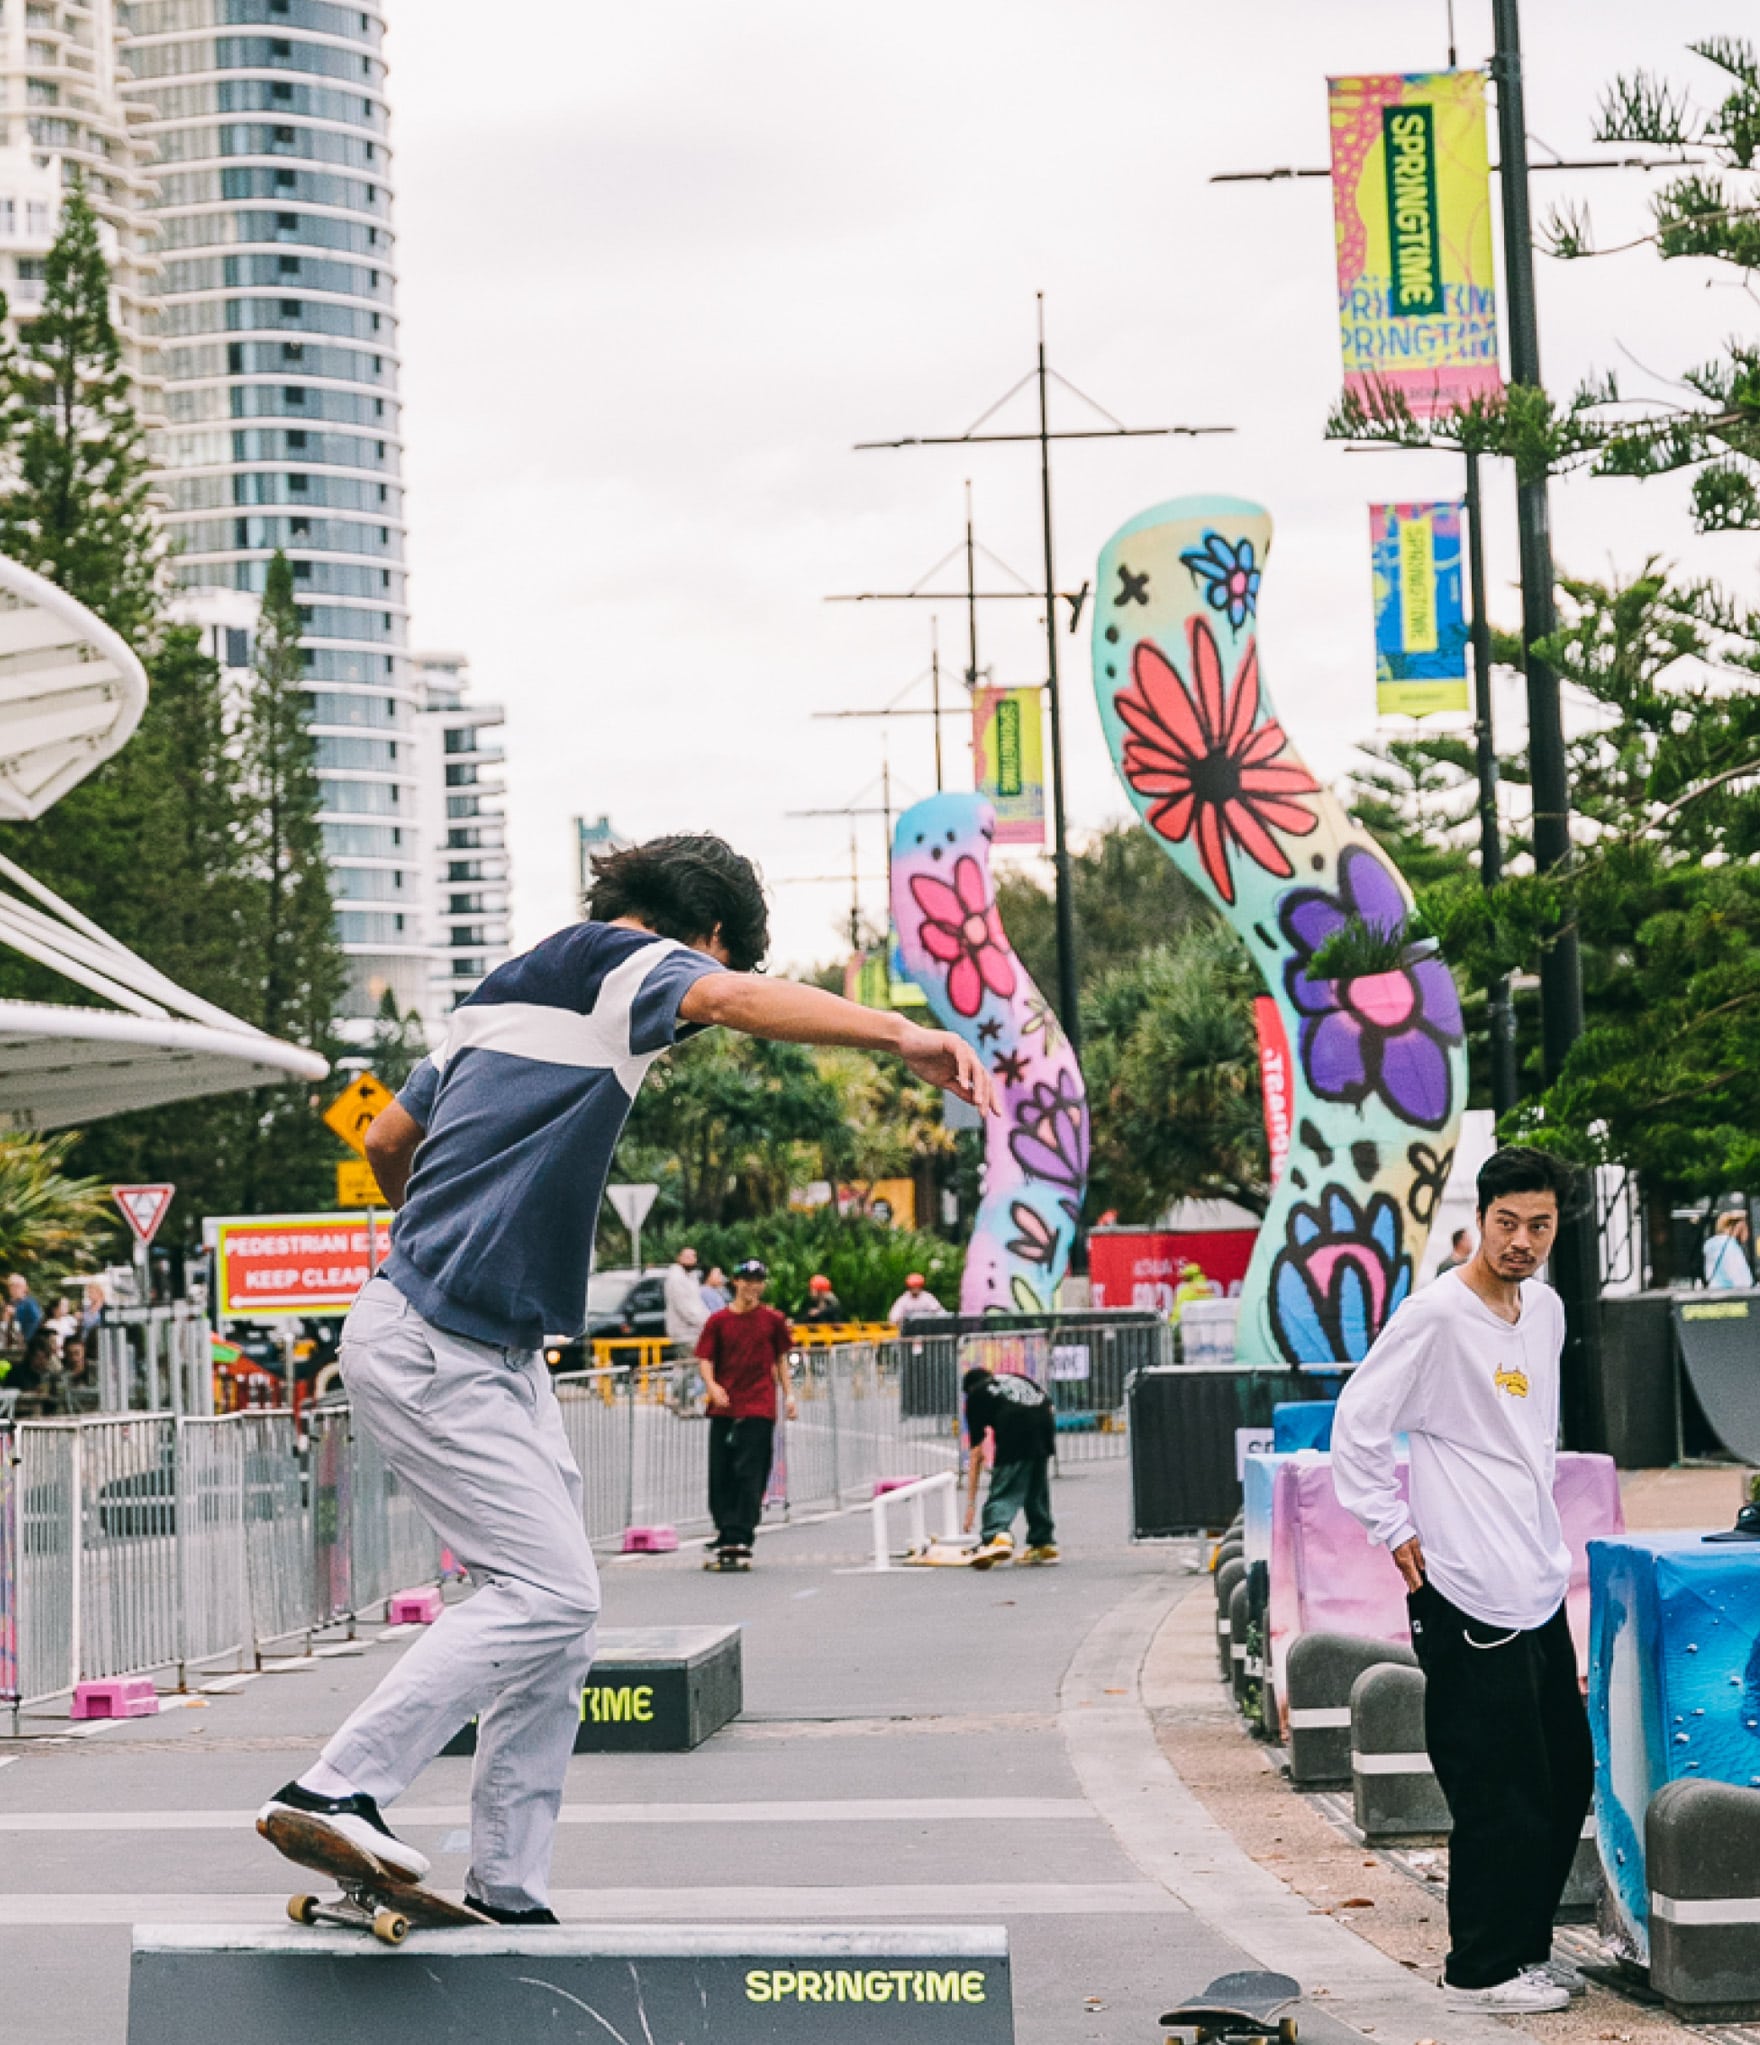 Skateboarder at SpringTime Festival Gold Coast 2-4 September 2022